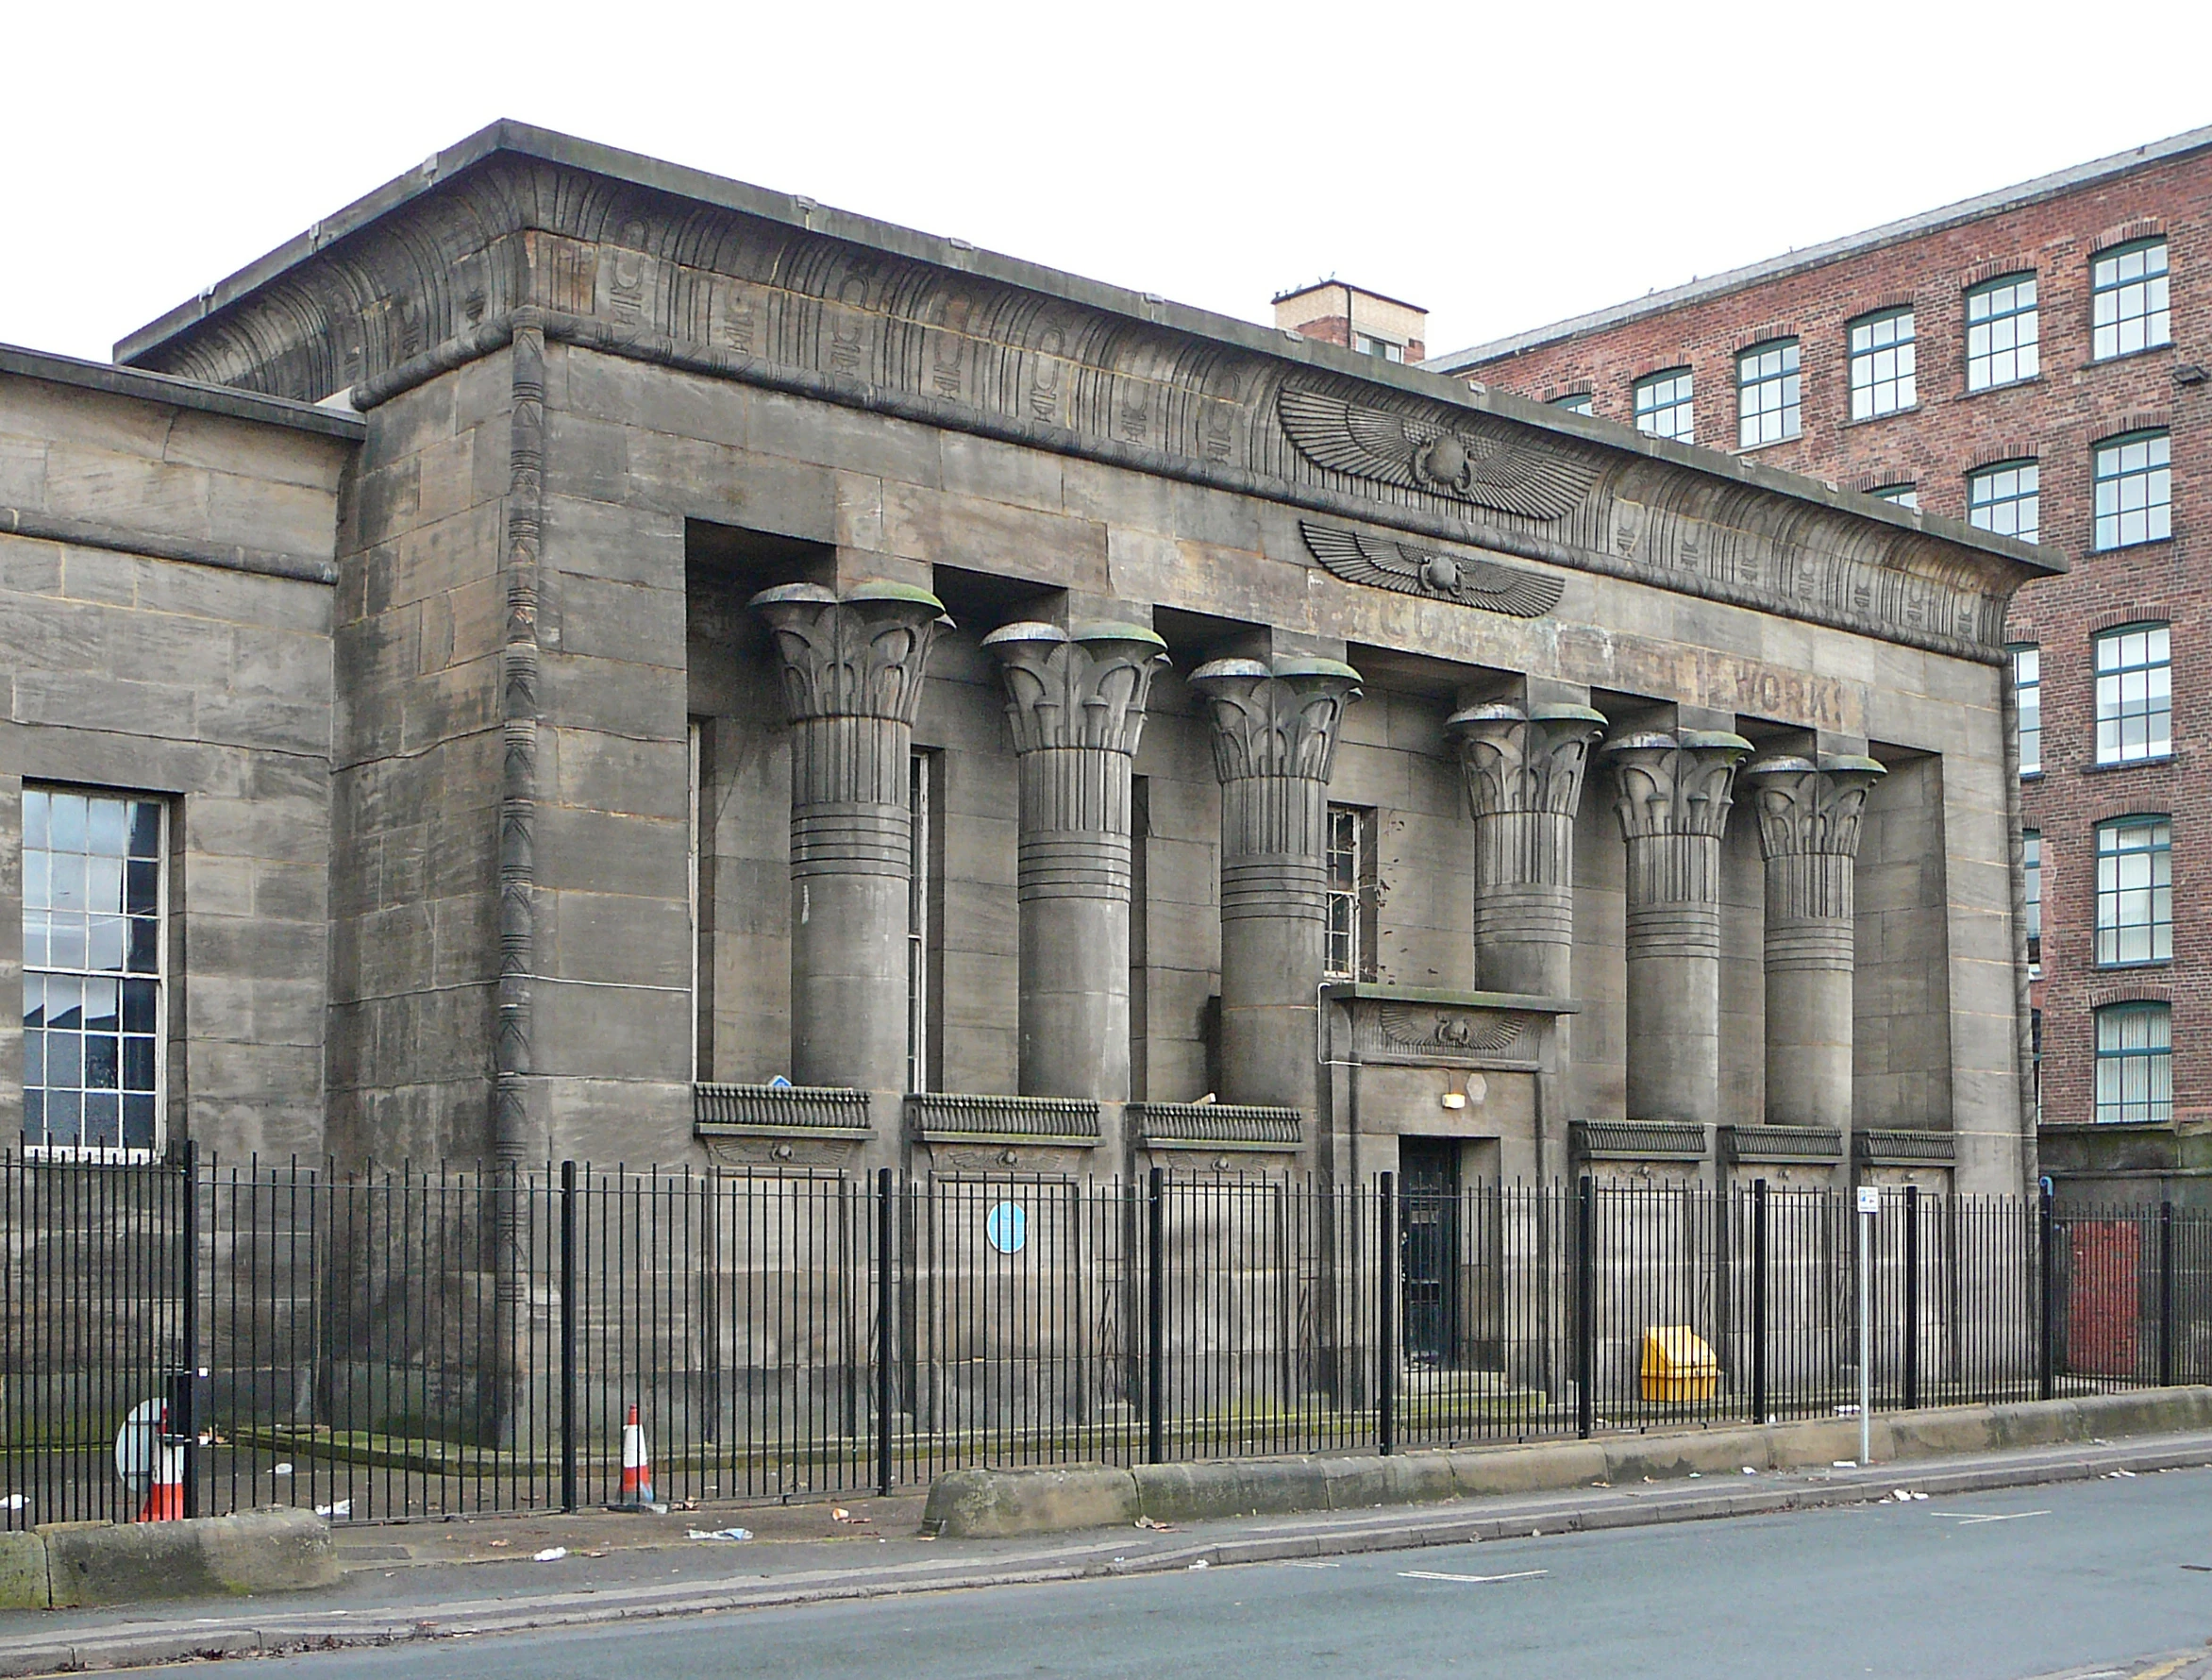 Temple Works, Holbeck, Leeds